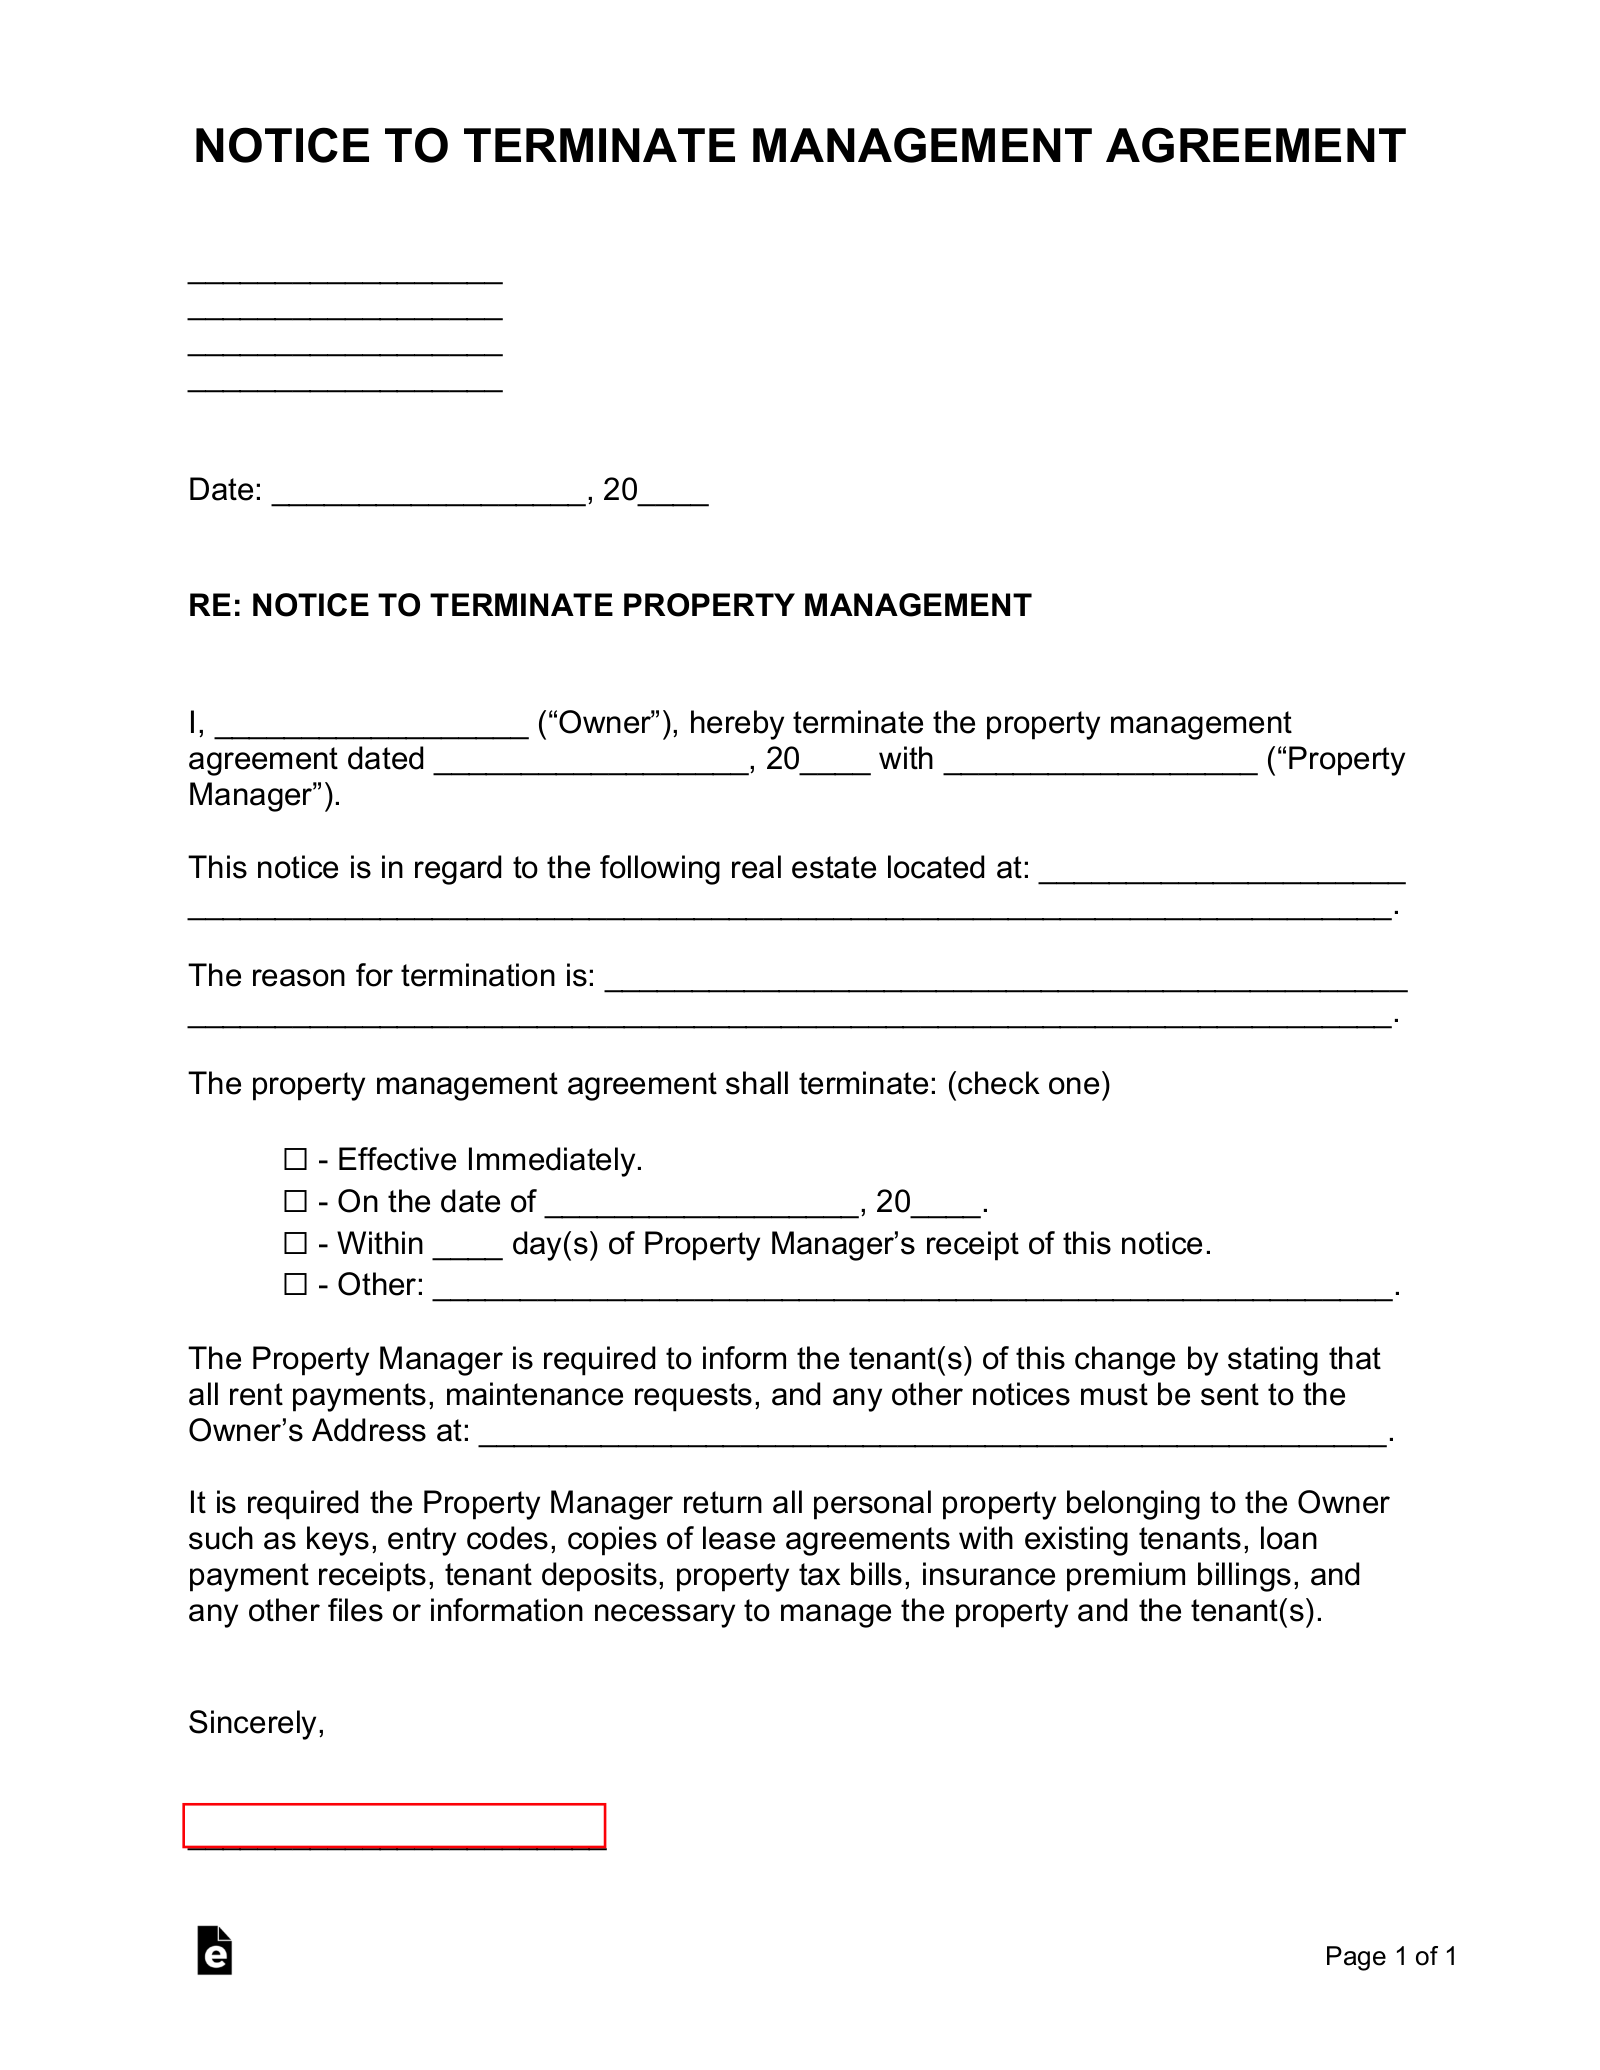 Property Management Agreement Termination Letter